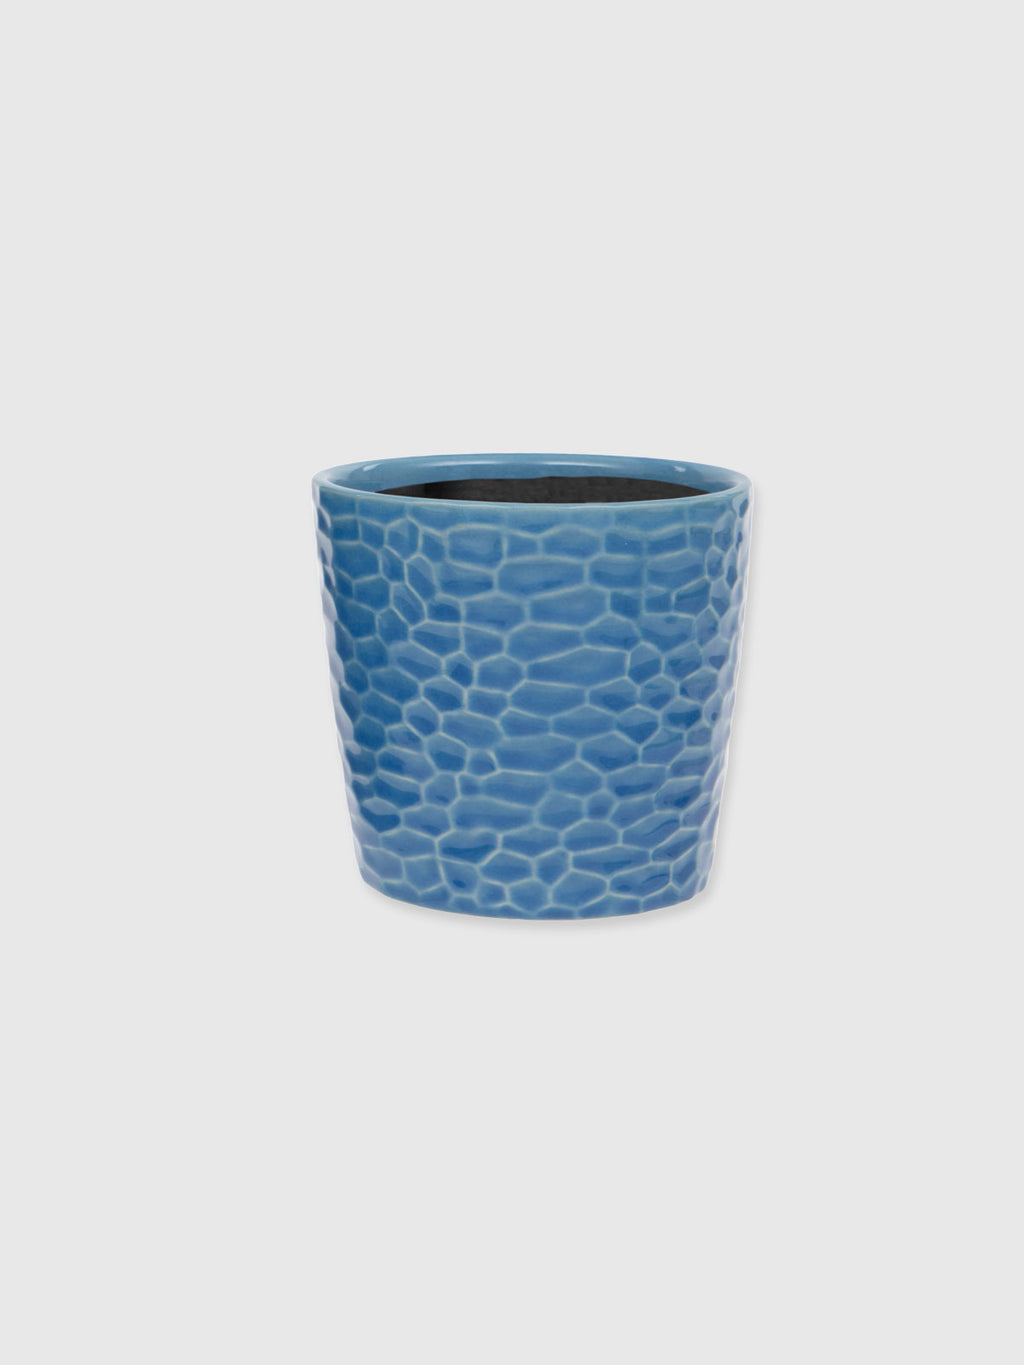 Faro Blue Ceramic Glazed Plant Pot - Medium